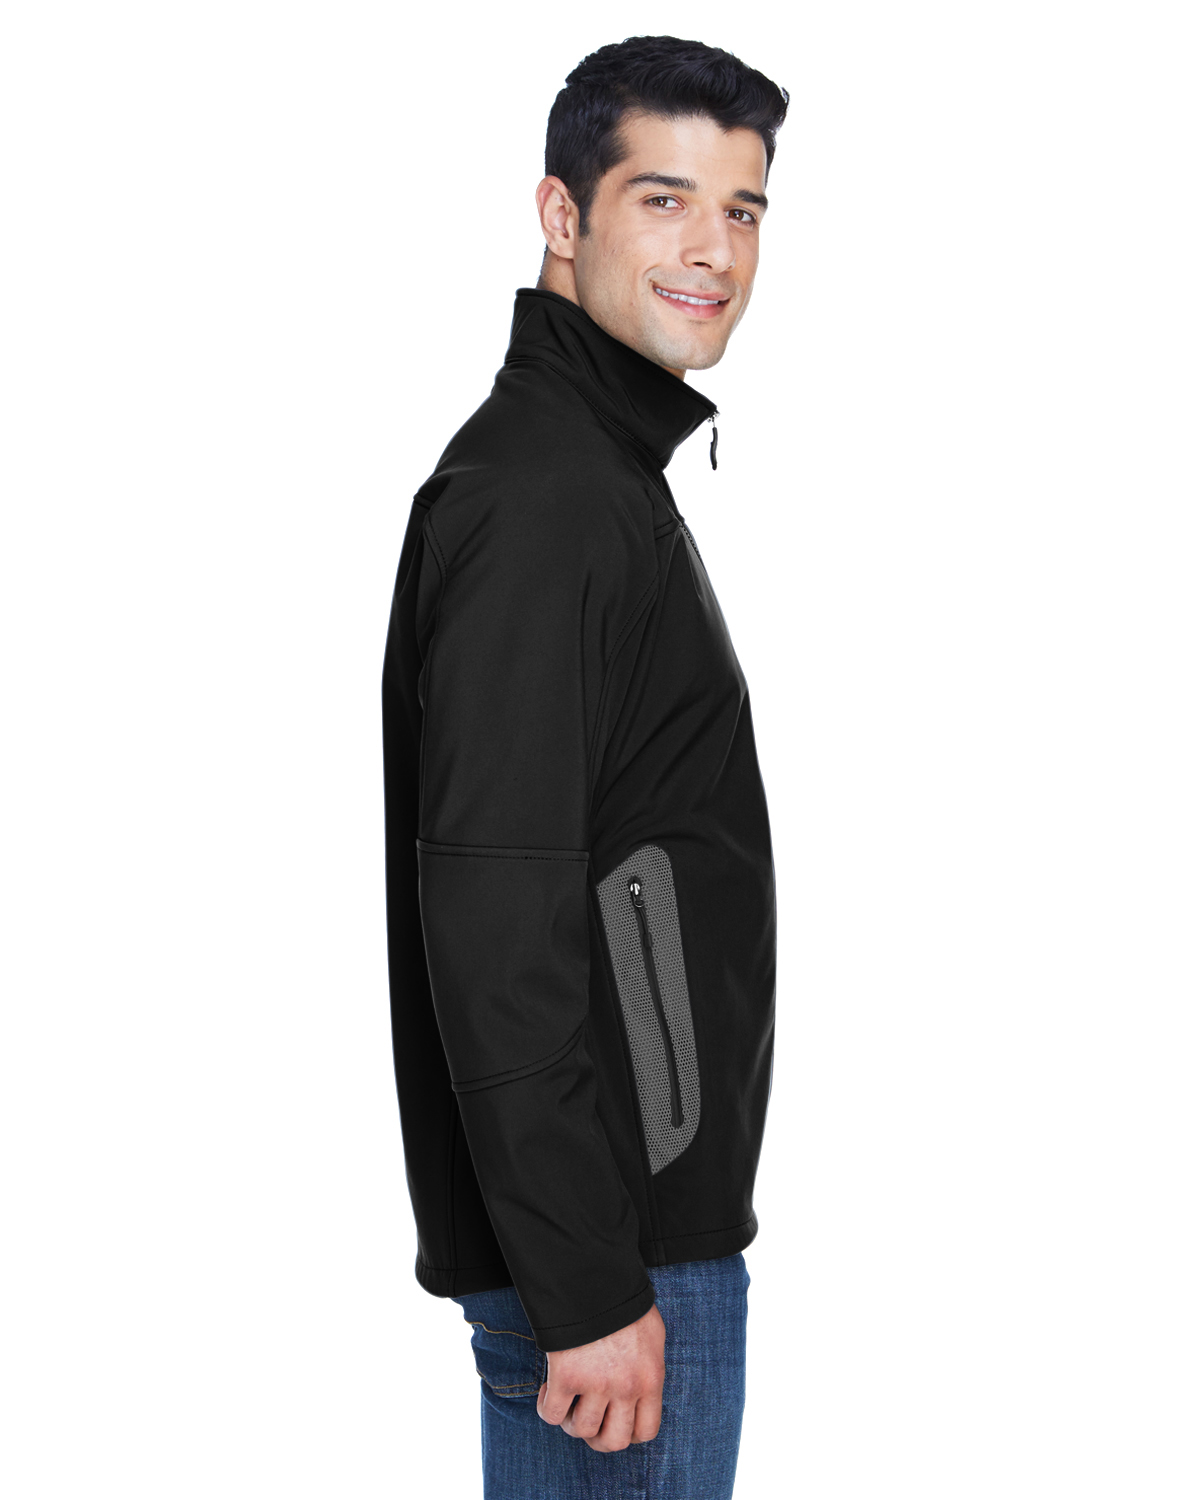 Men's Three-Layer Fleece Bonded Soft Shell Technical Jacket - BLACK - XL - image 3 of 3